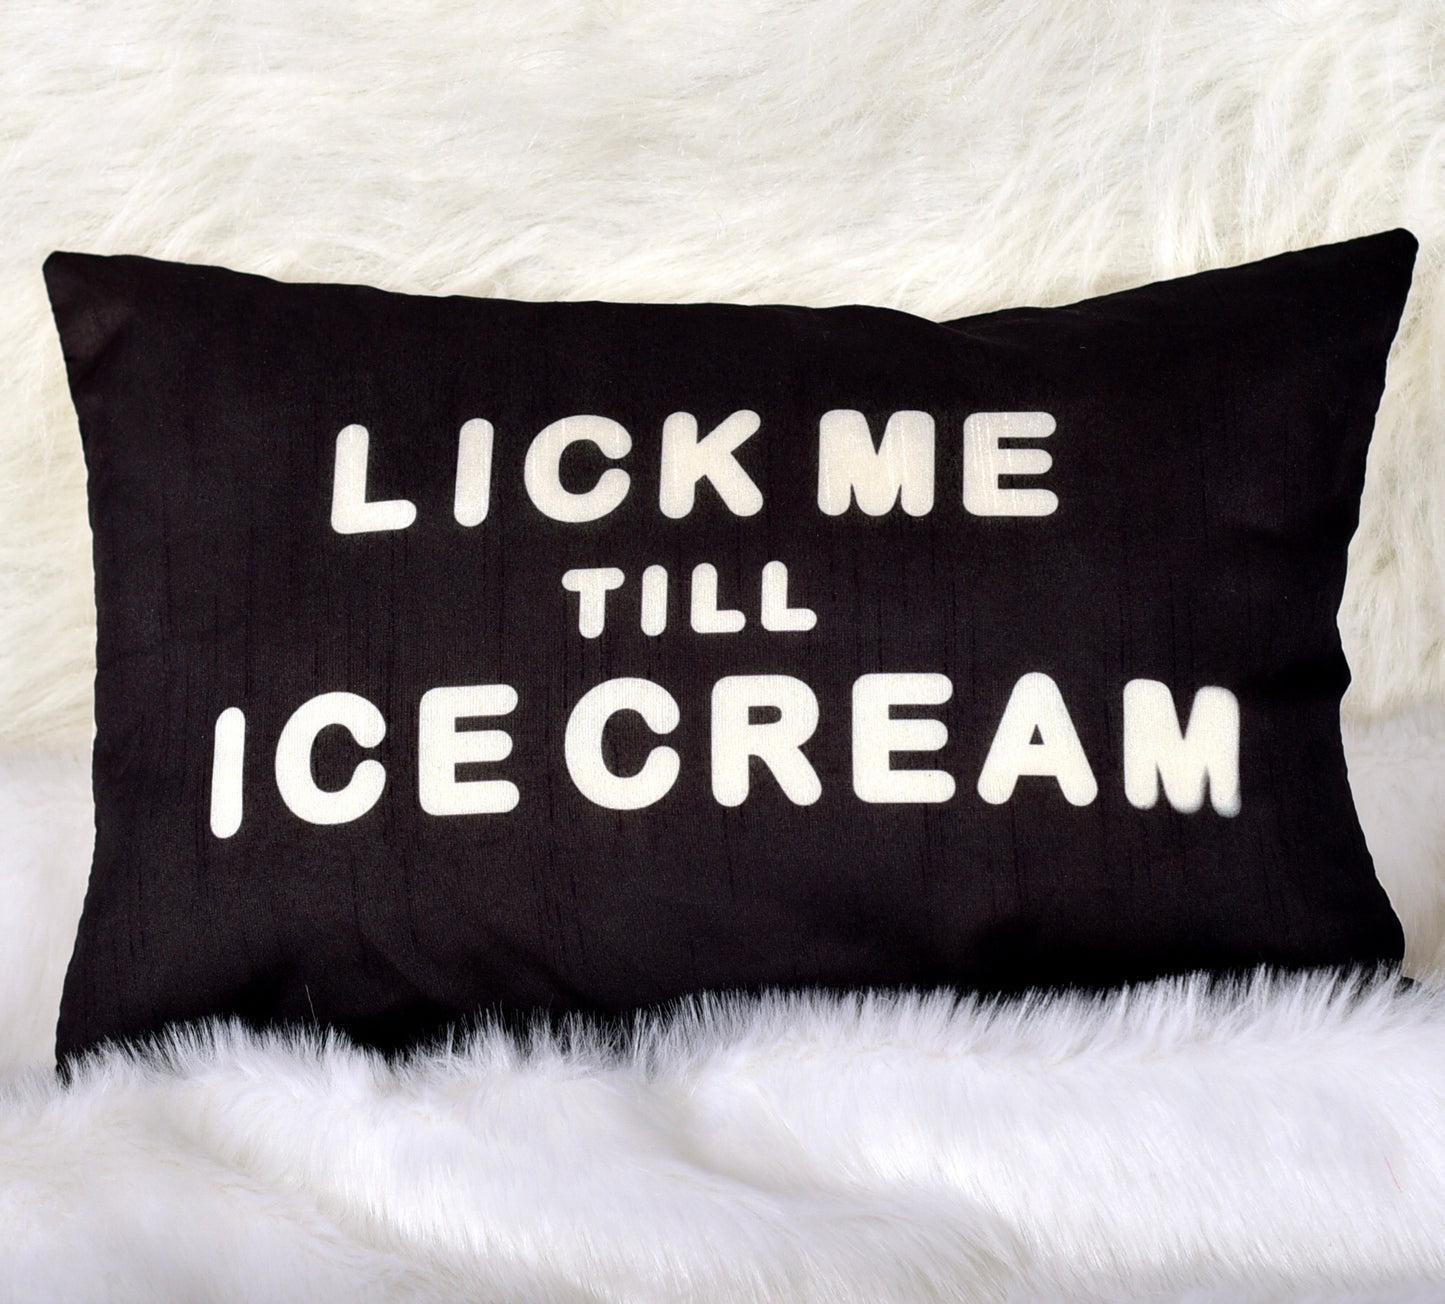 Lick me